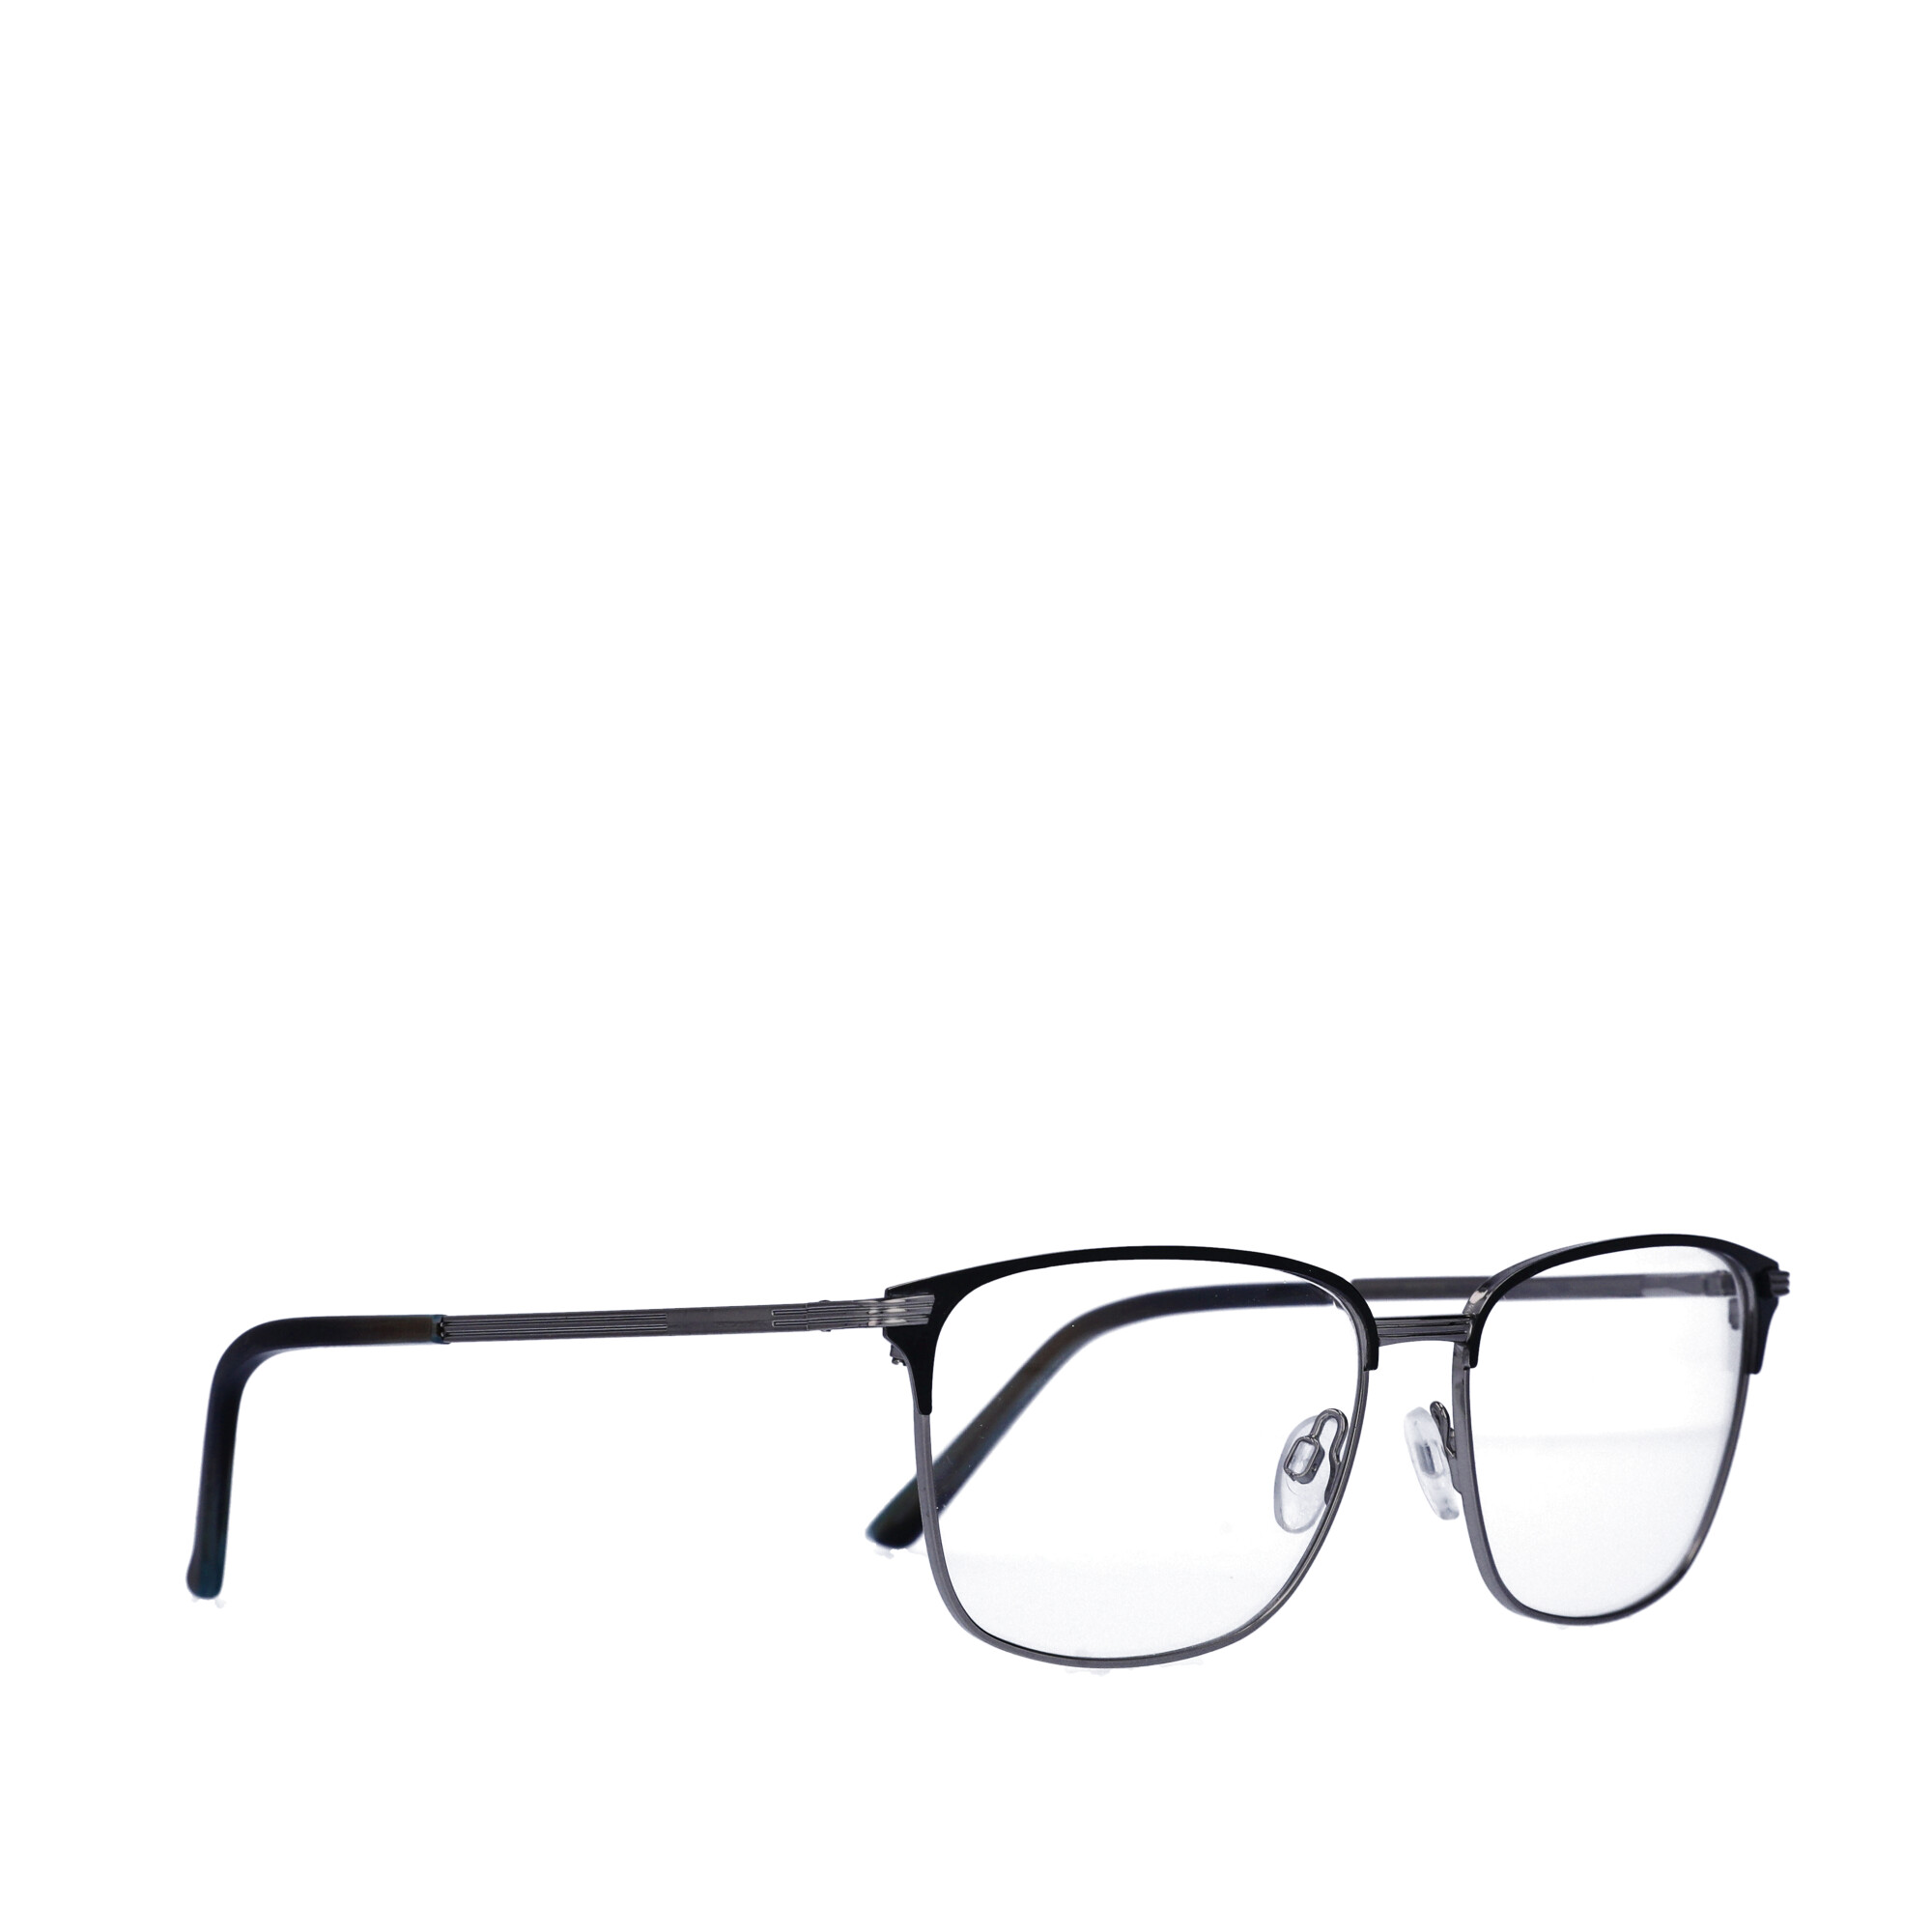 Walmart Men's Rx'able Eyeglasses, Mop44, Black Silver, 57-16-150 - image 2 of 13